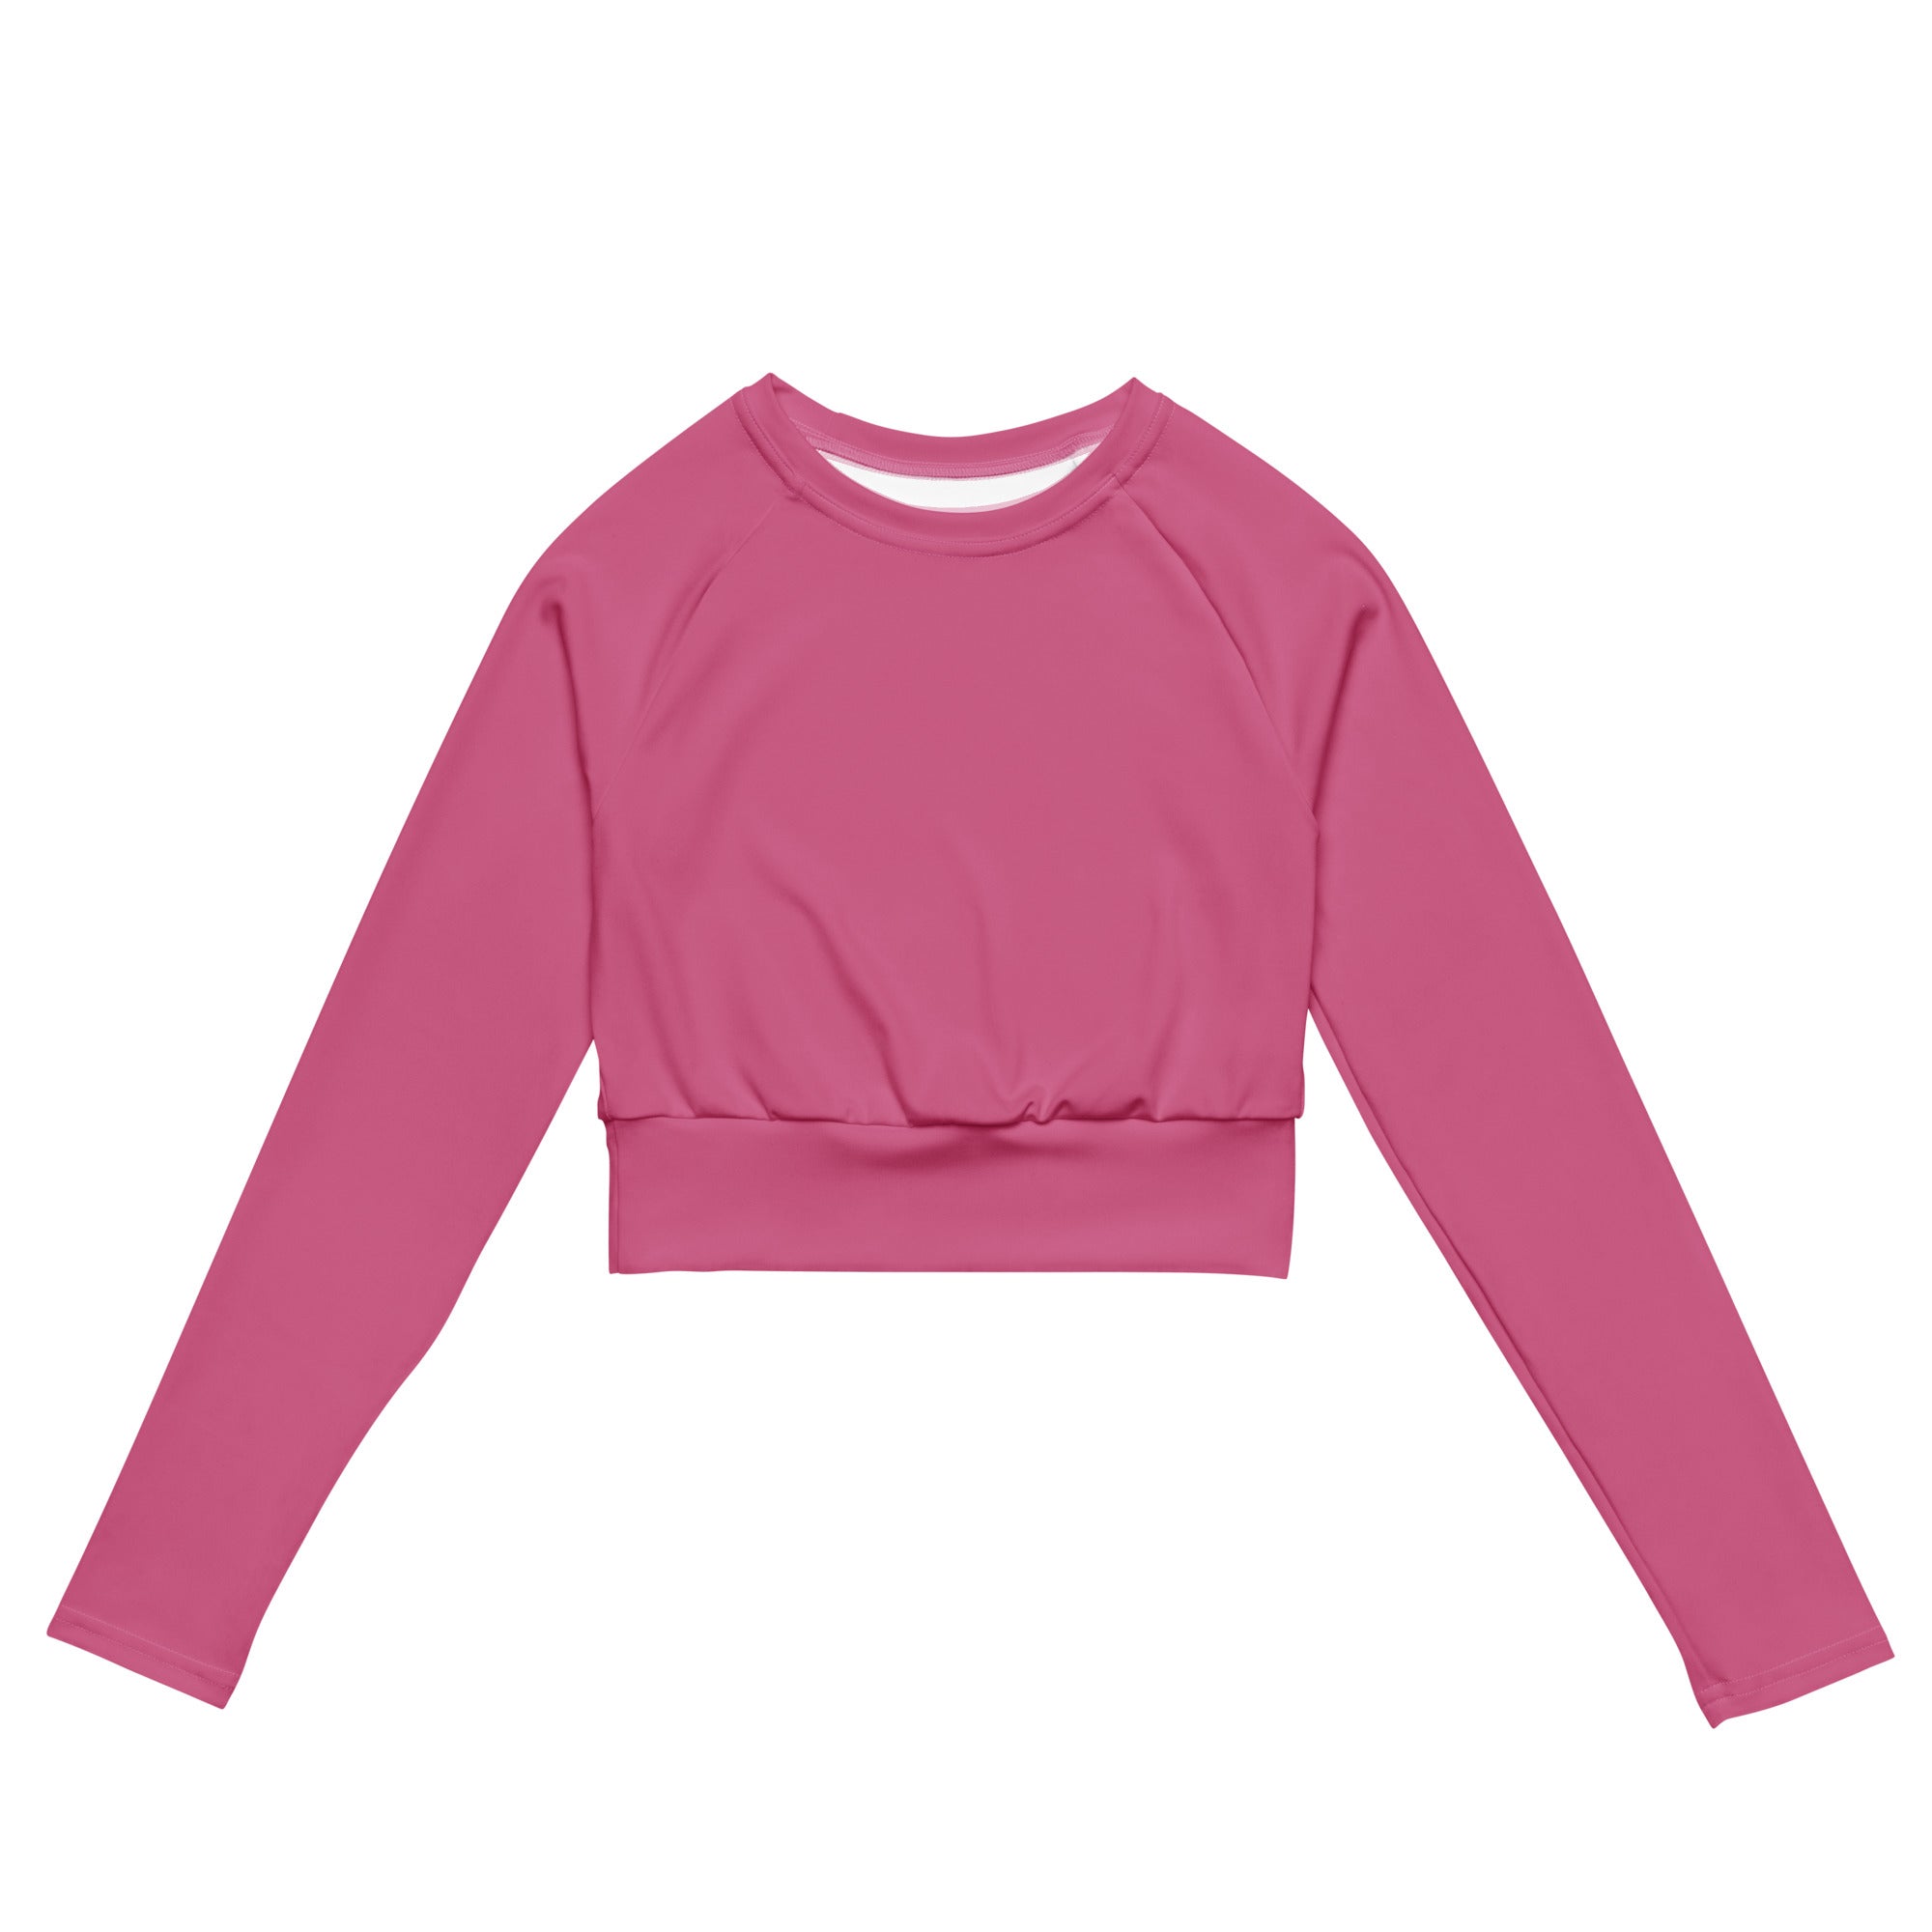 Bubblegum Pink Recycled Long-sleeve Crop Top